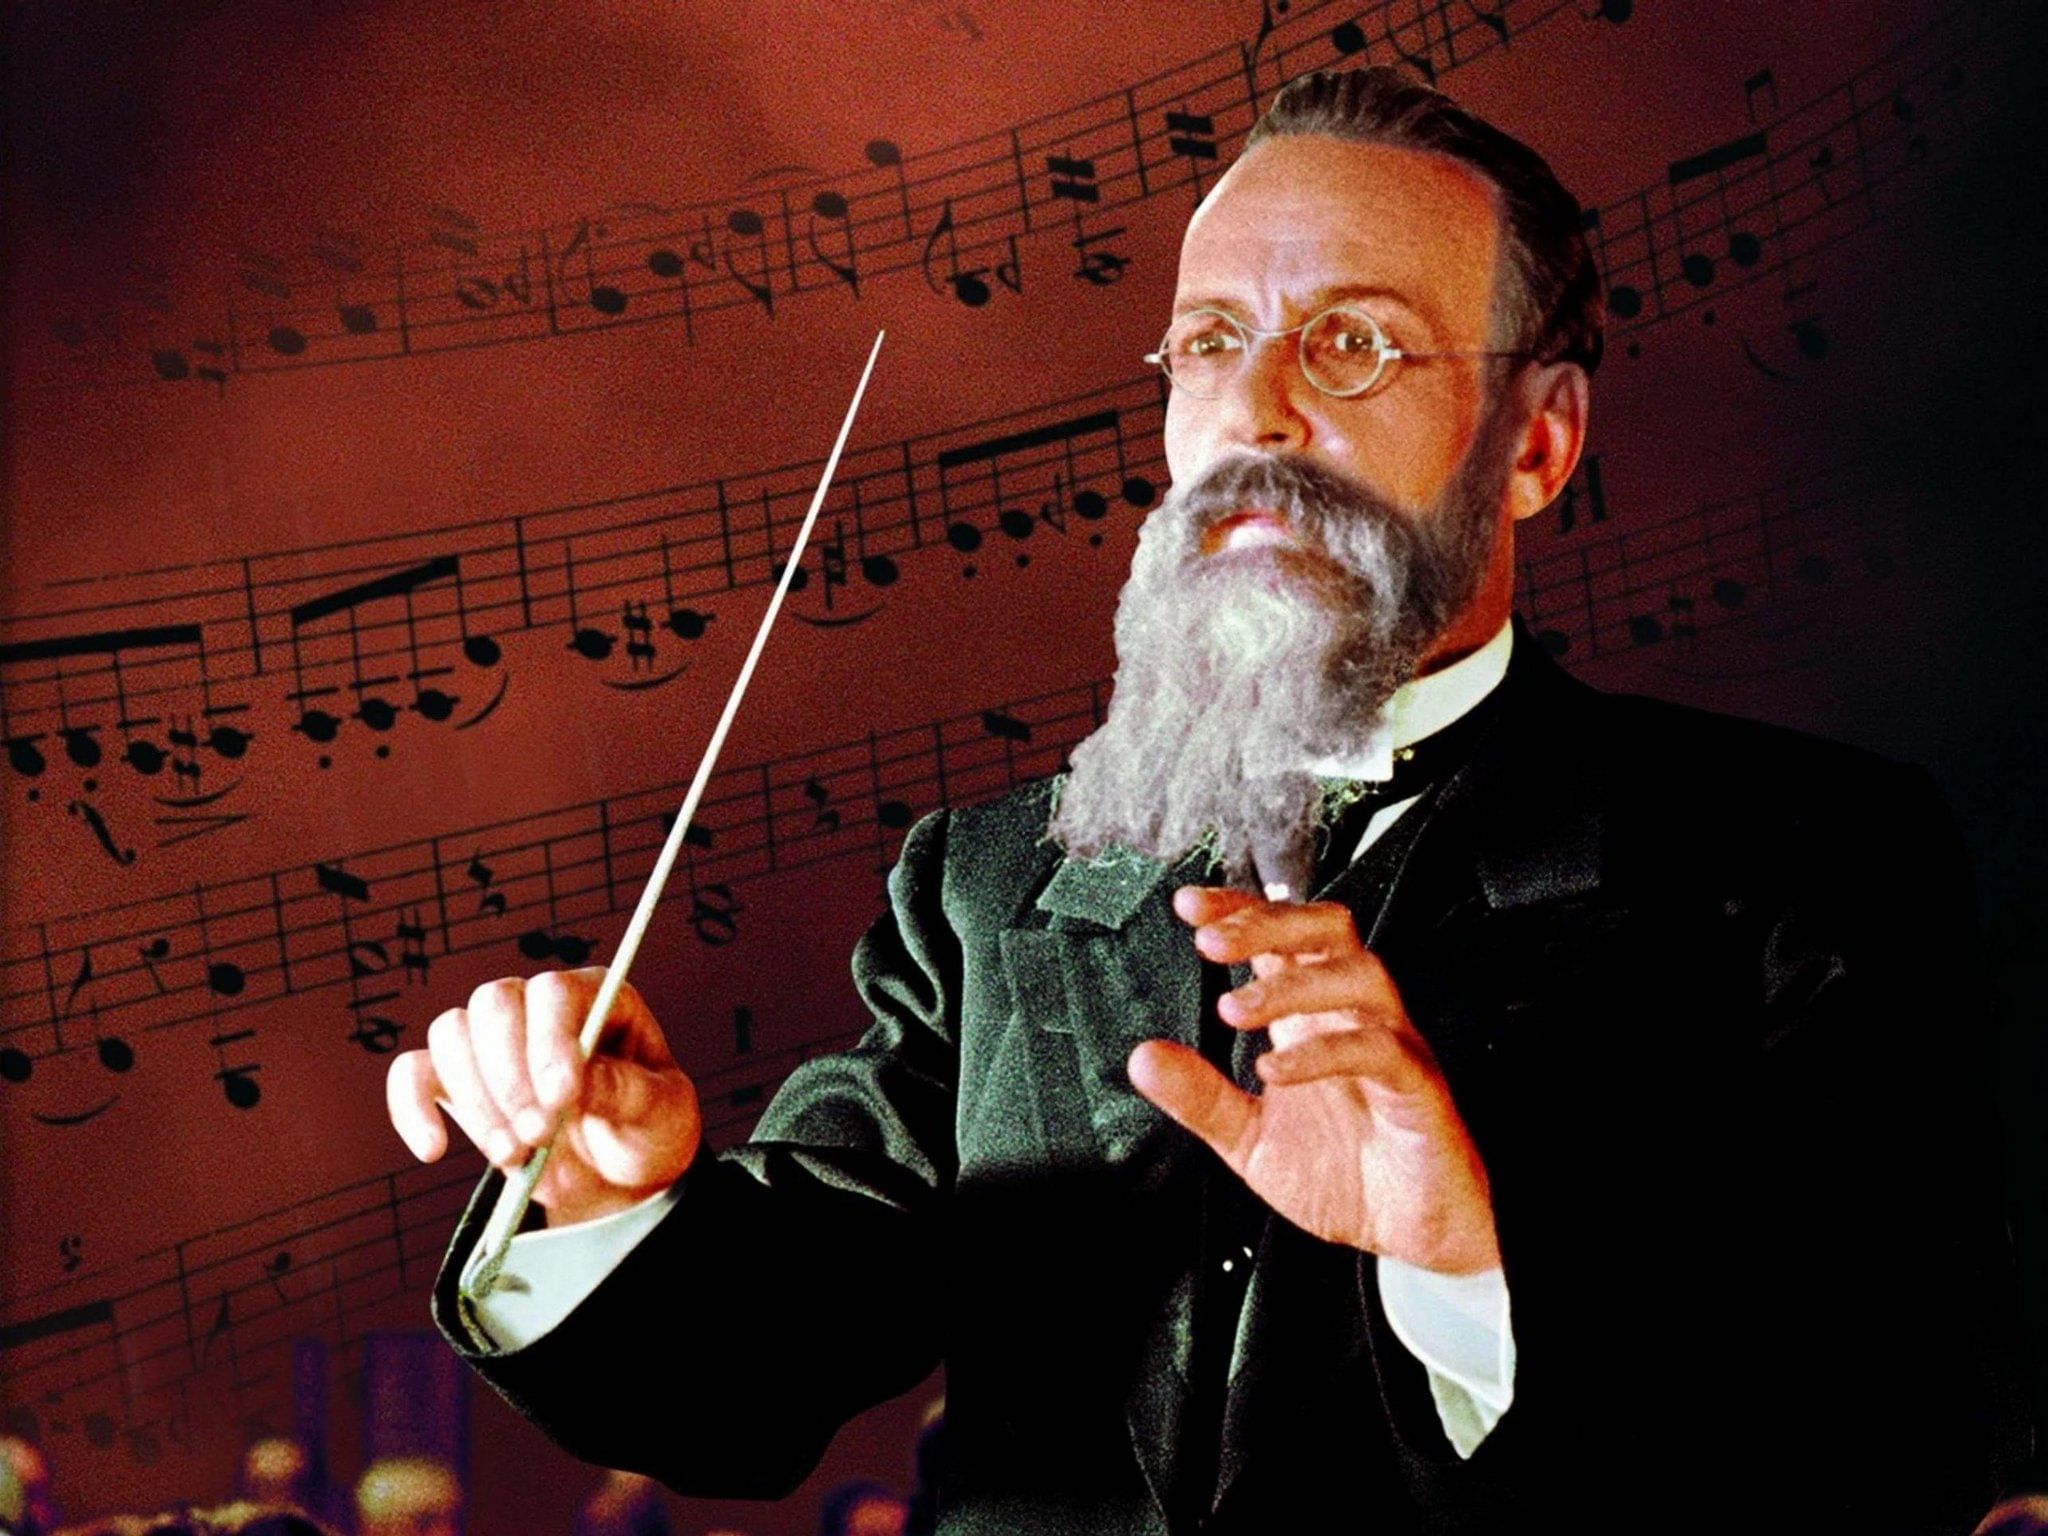 Музыка великий музыкант. Римский Корсаков композитор. Римский-Корсаков (1844-1908).